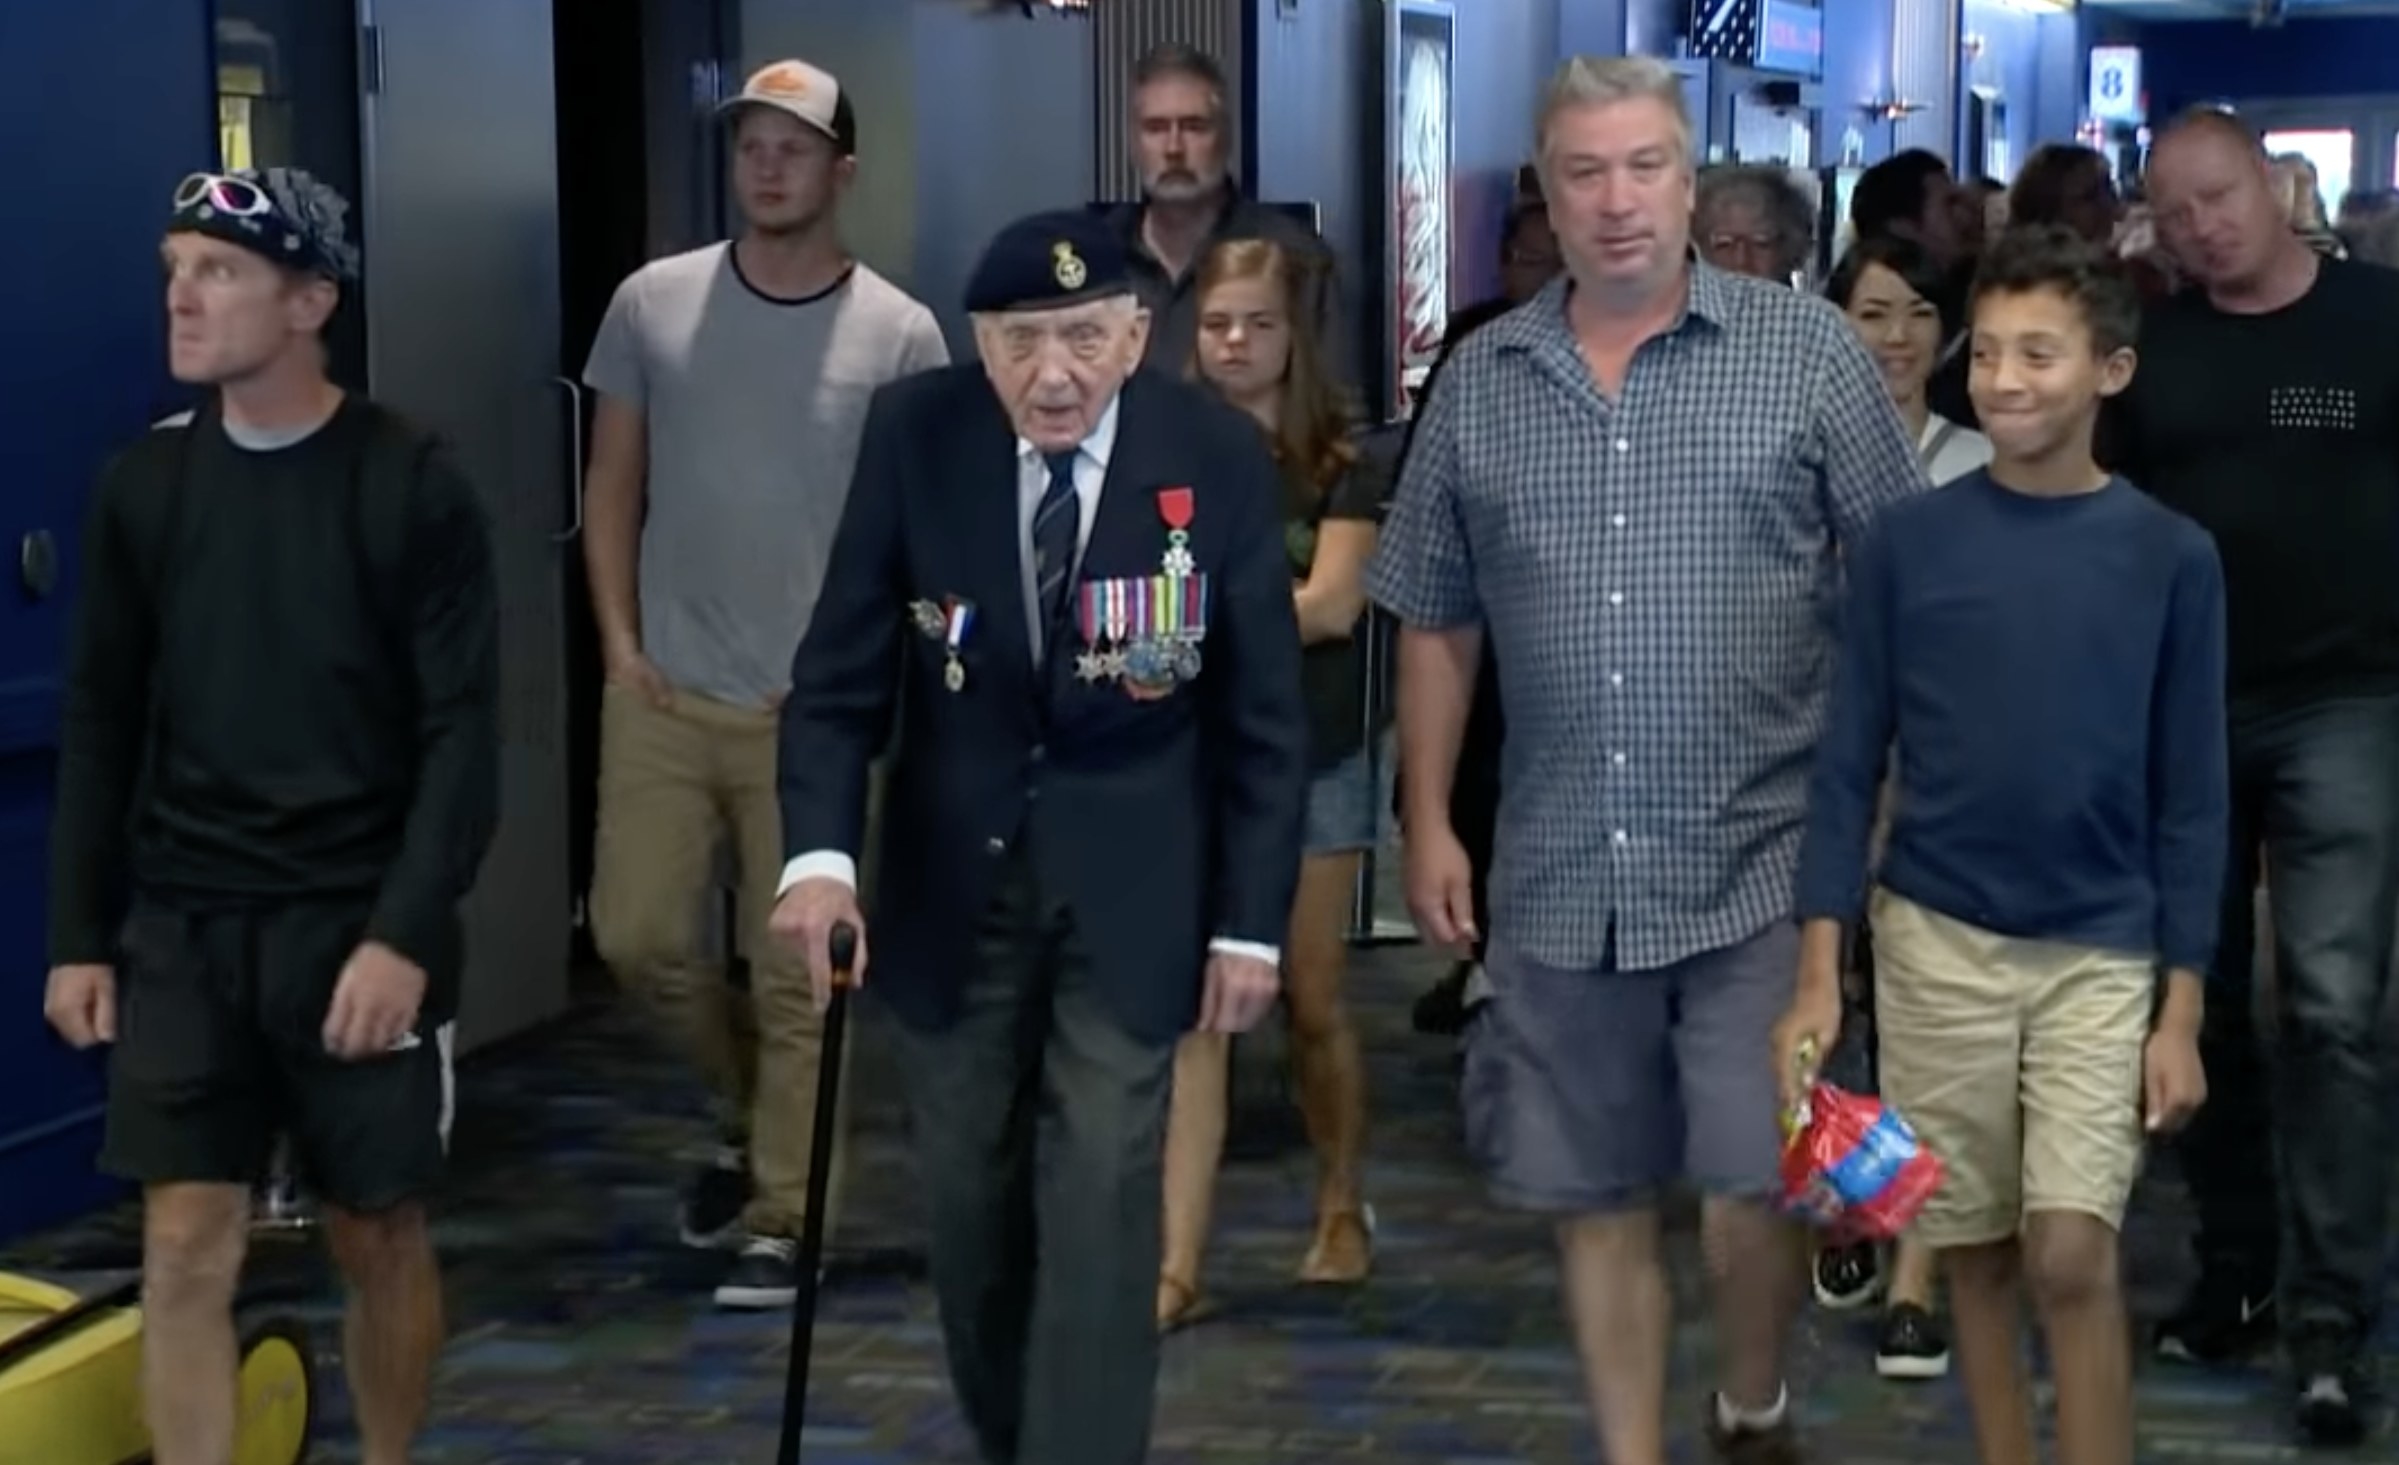 A WWI veteran walks through a movie theater hallway with family around him